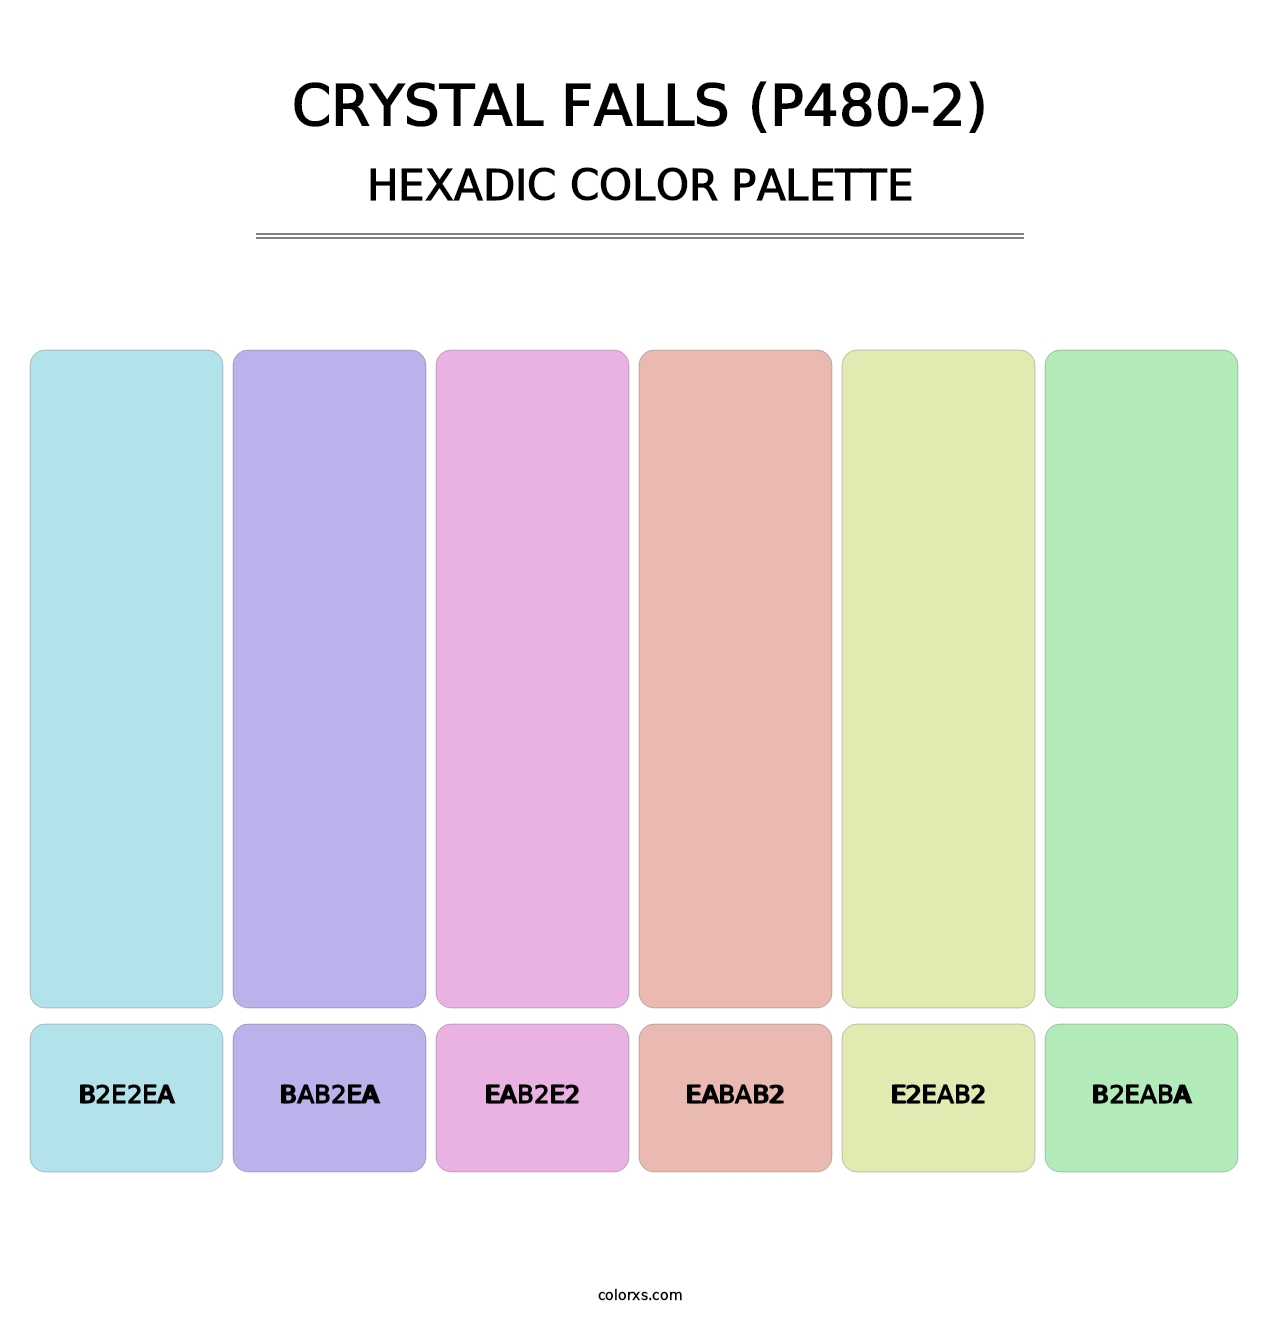 Crystal Falls (P480-2) - Hexadic Color Palette